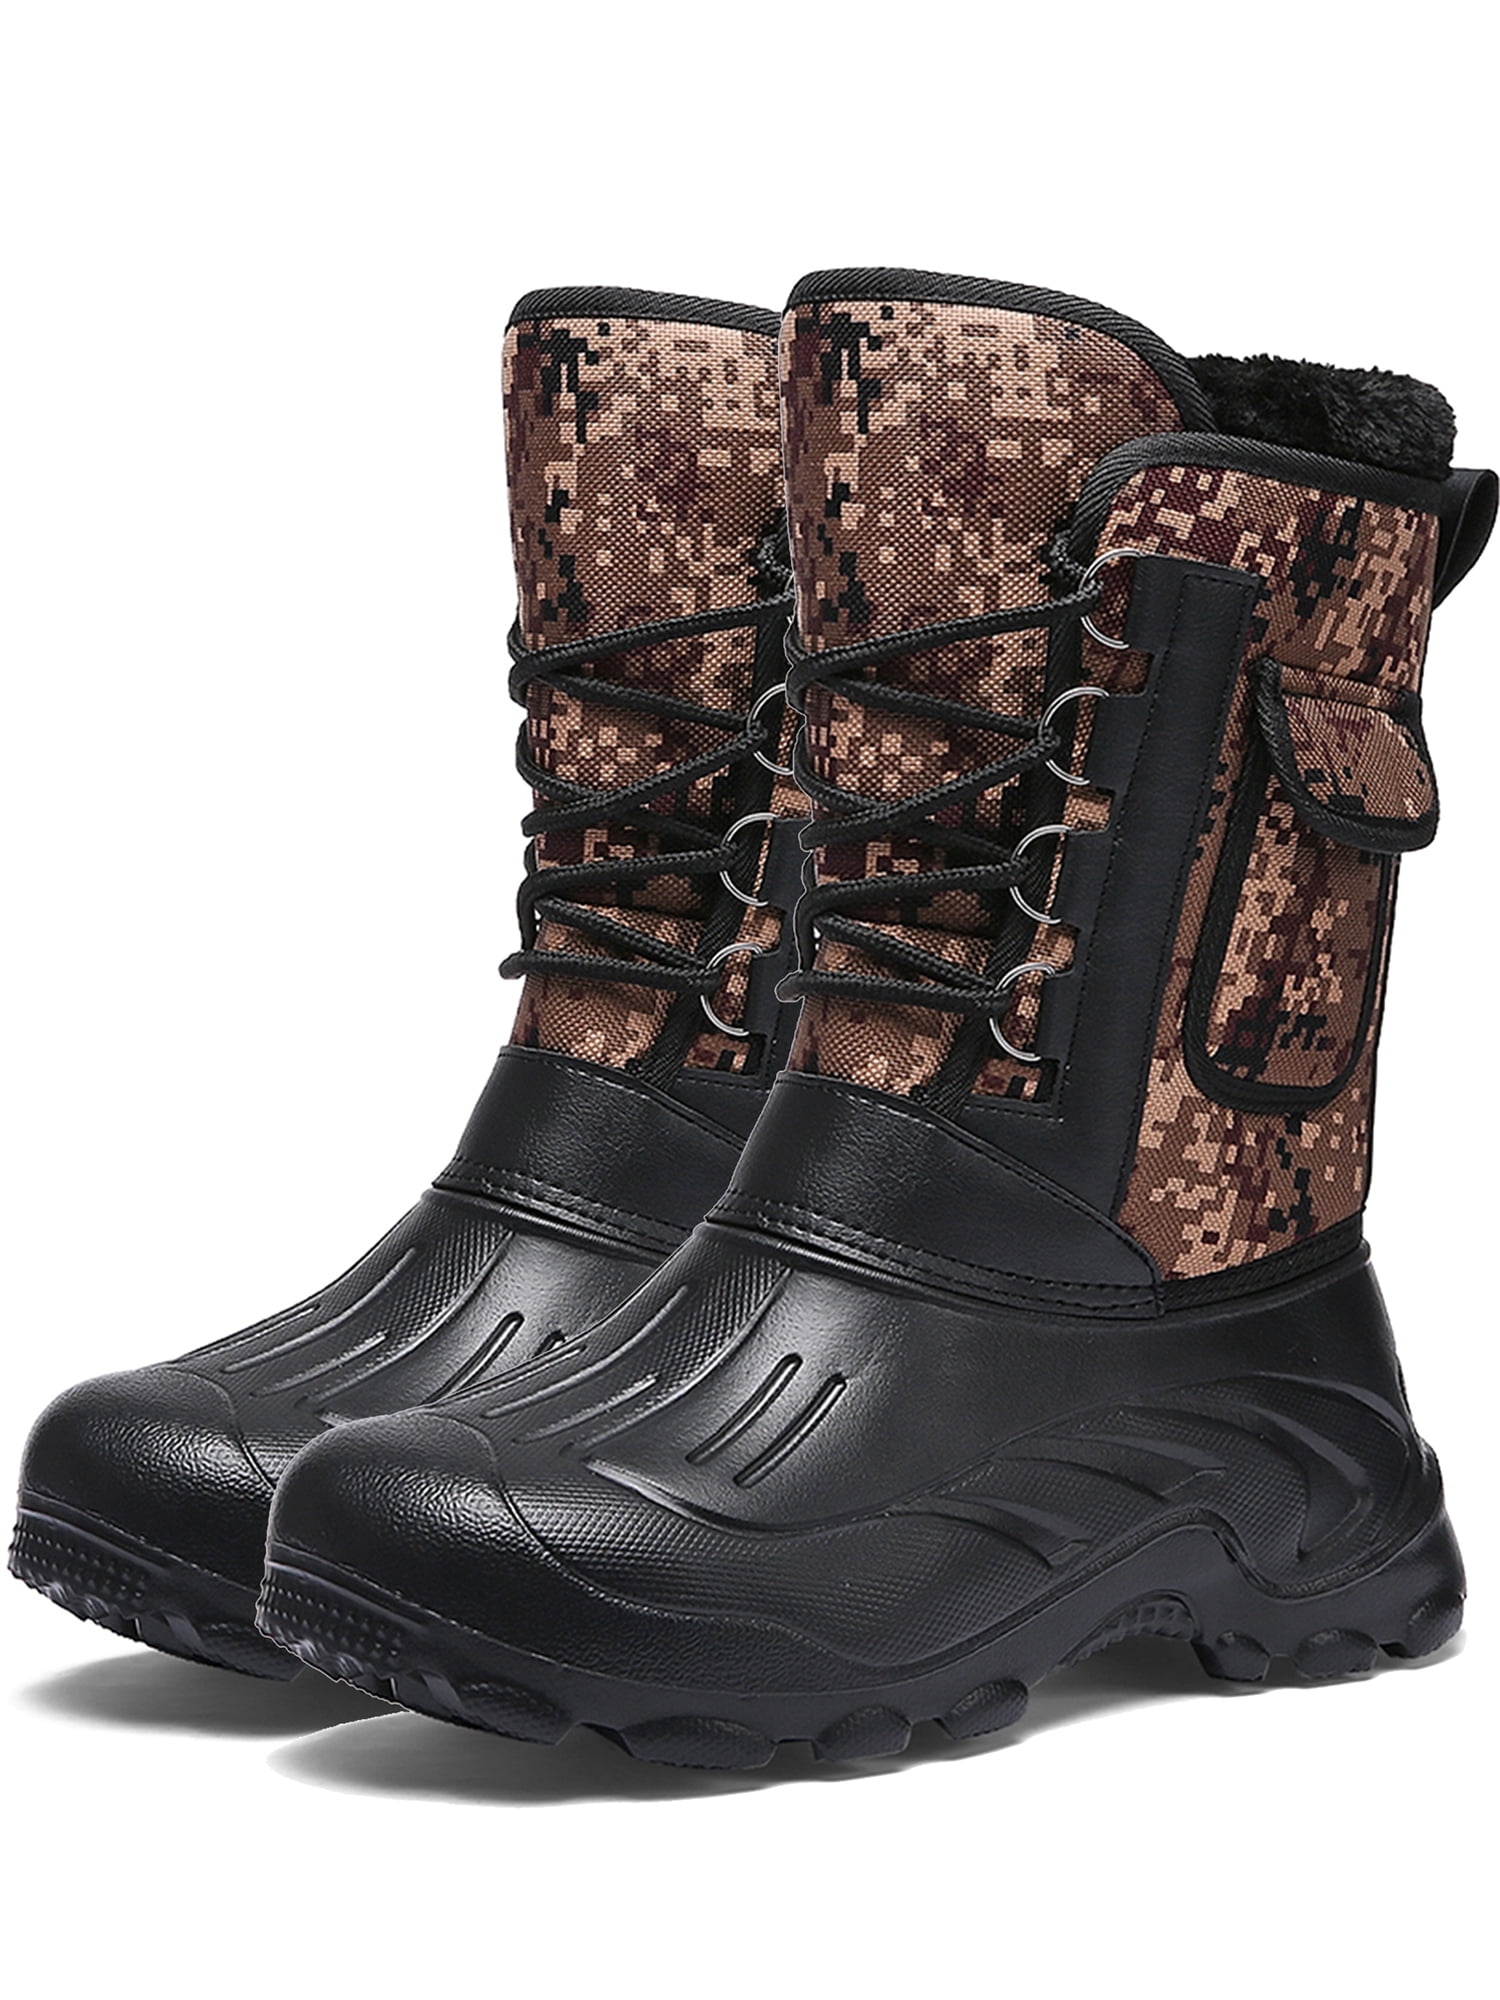 mens wide width winter boots